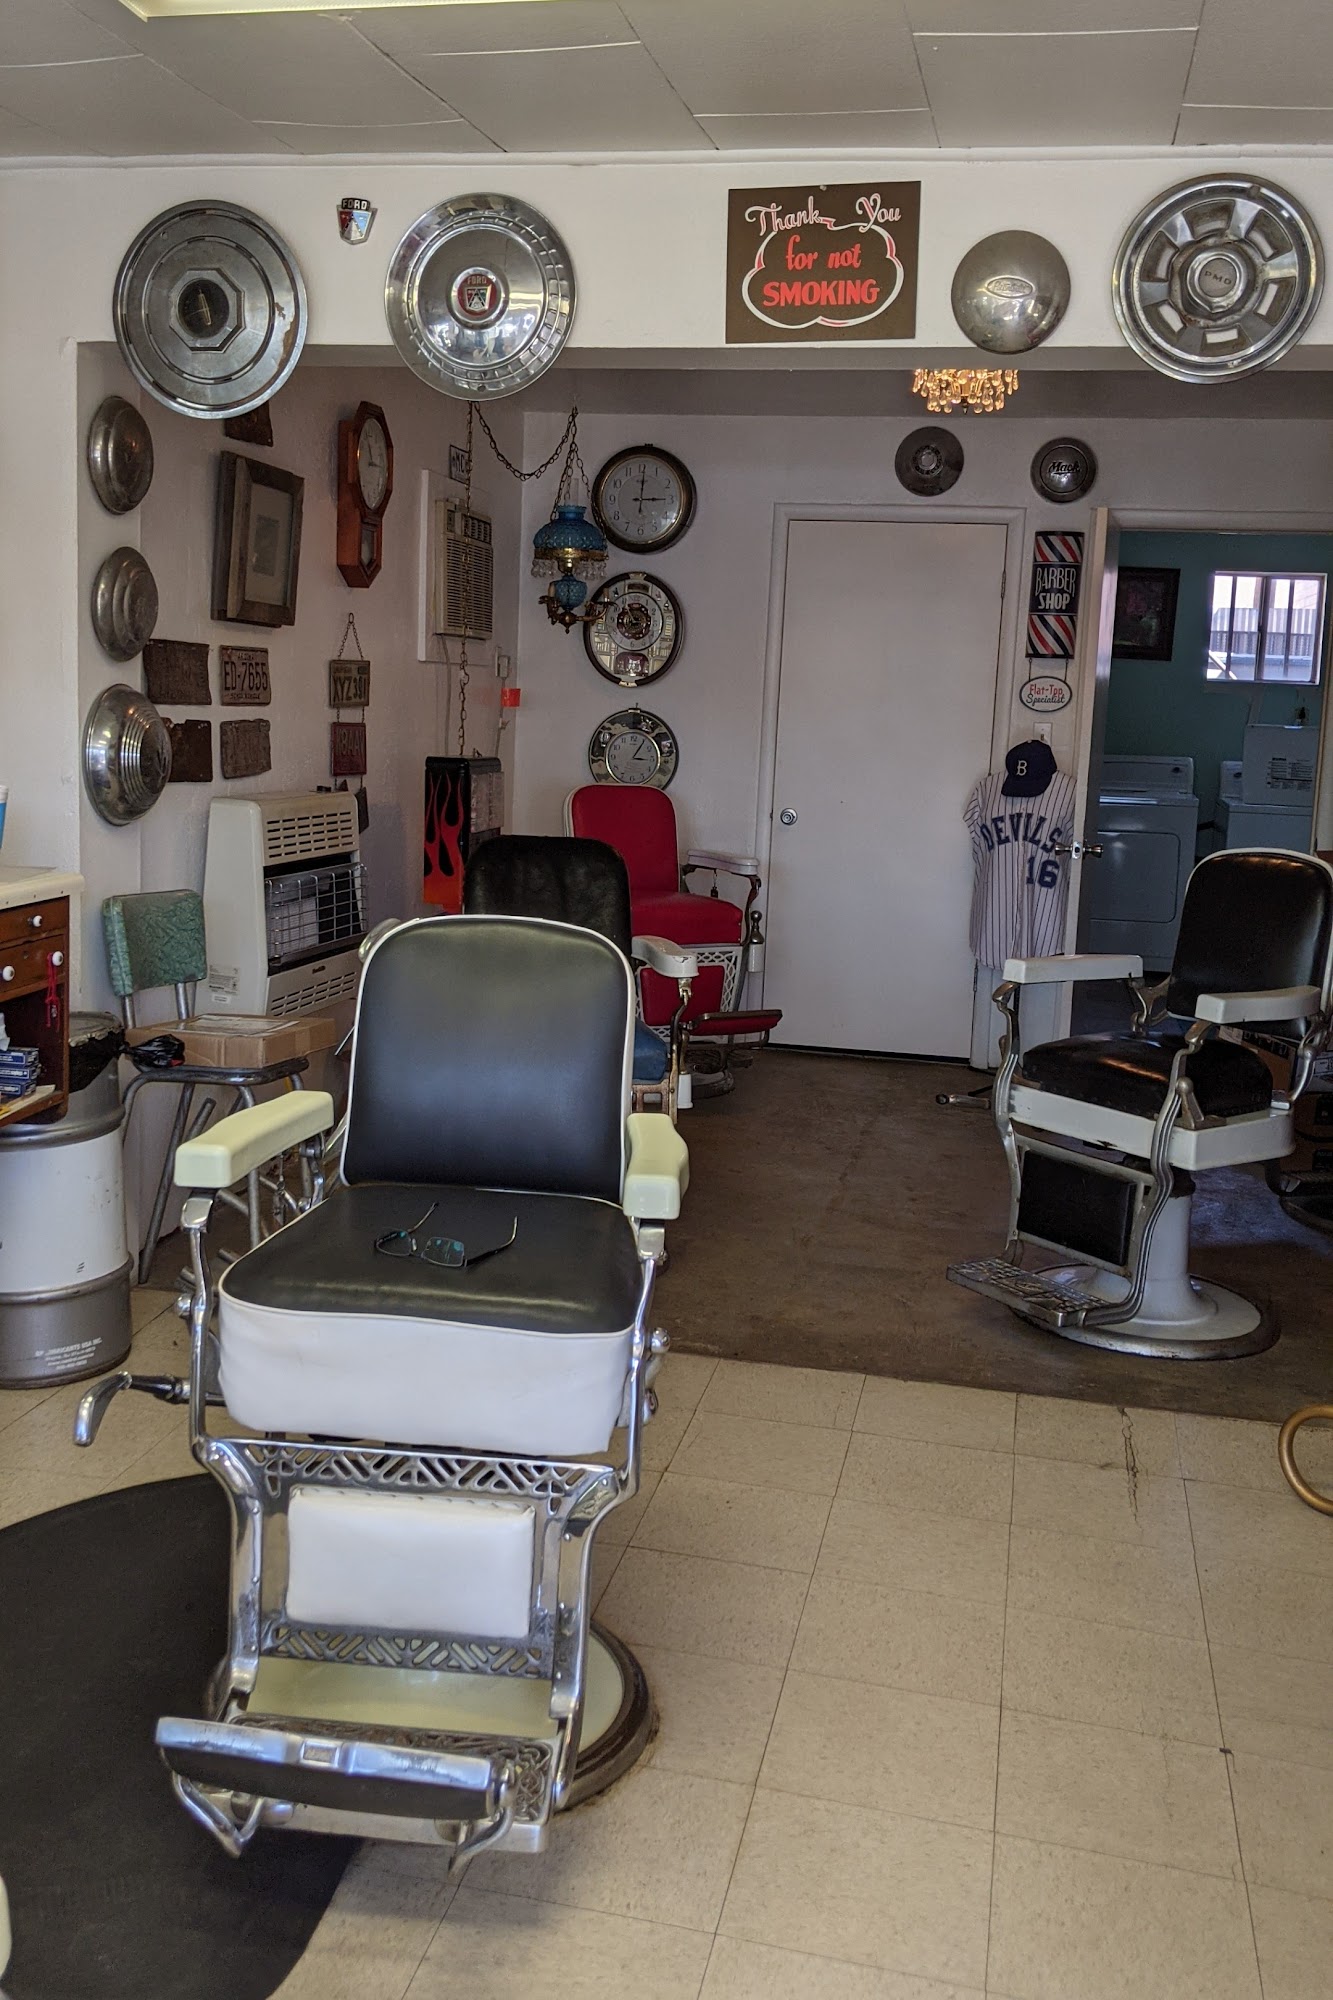 Orlando's Barbershop 111 S Haskell Ave, Willcox Arizona 85643